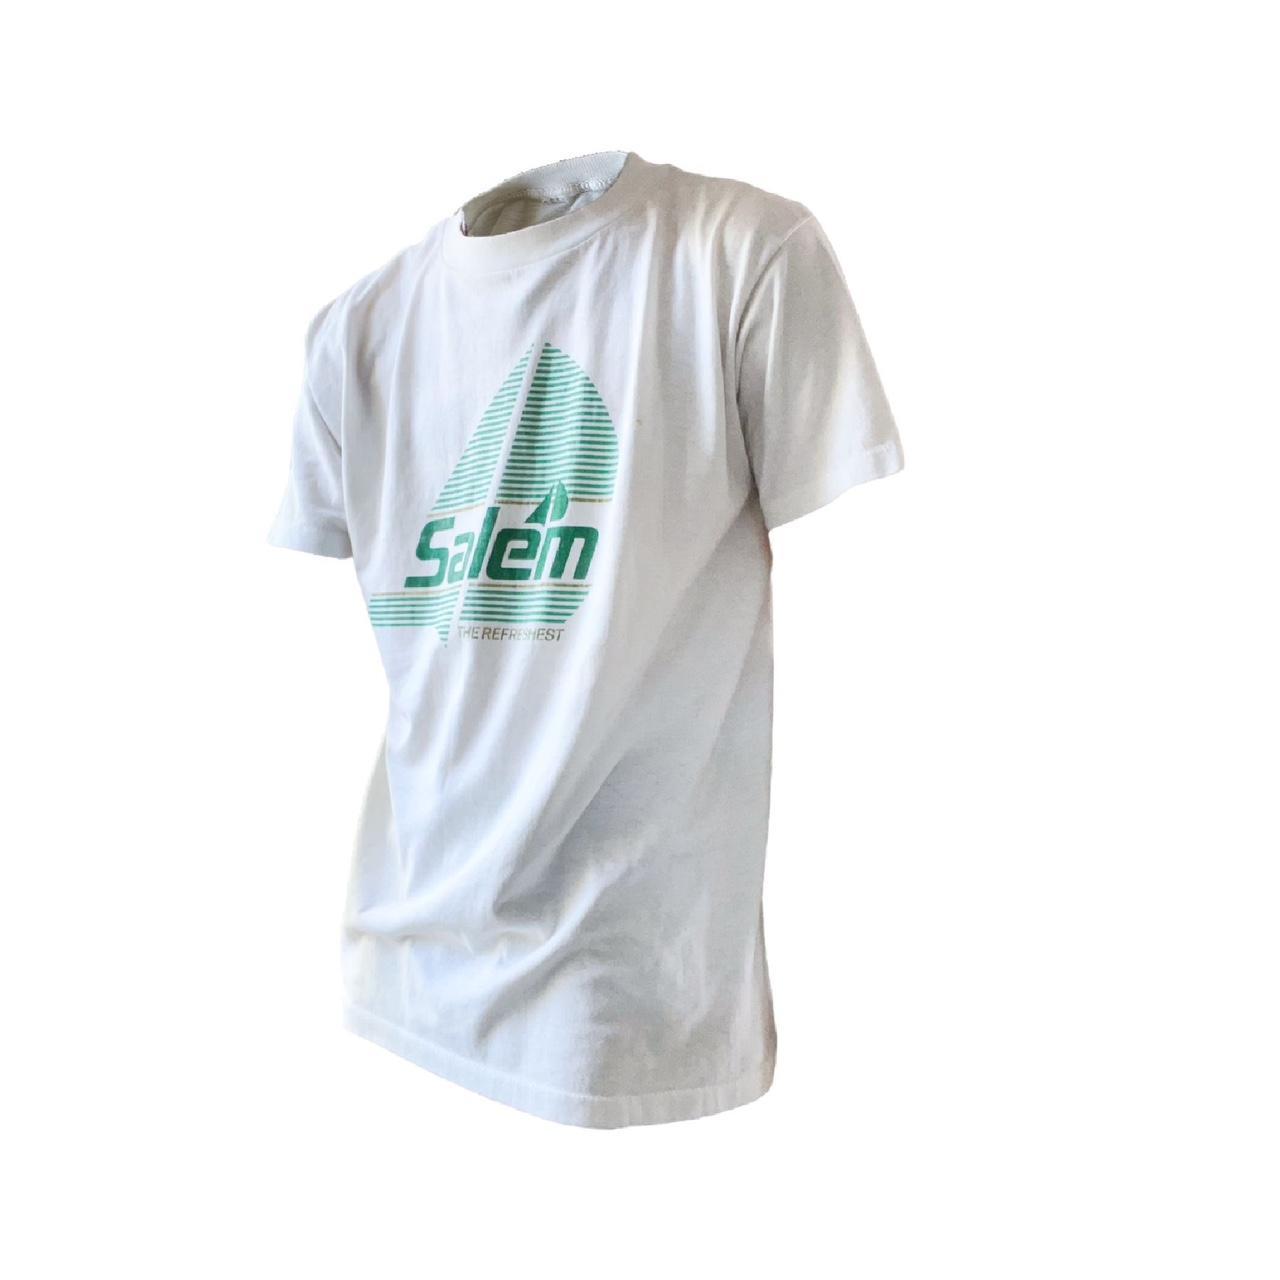 Salem Sportswear Men's T-Shirt - White - M